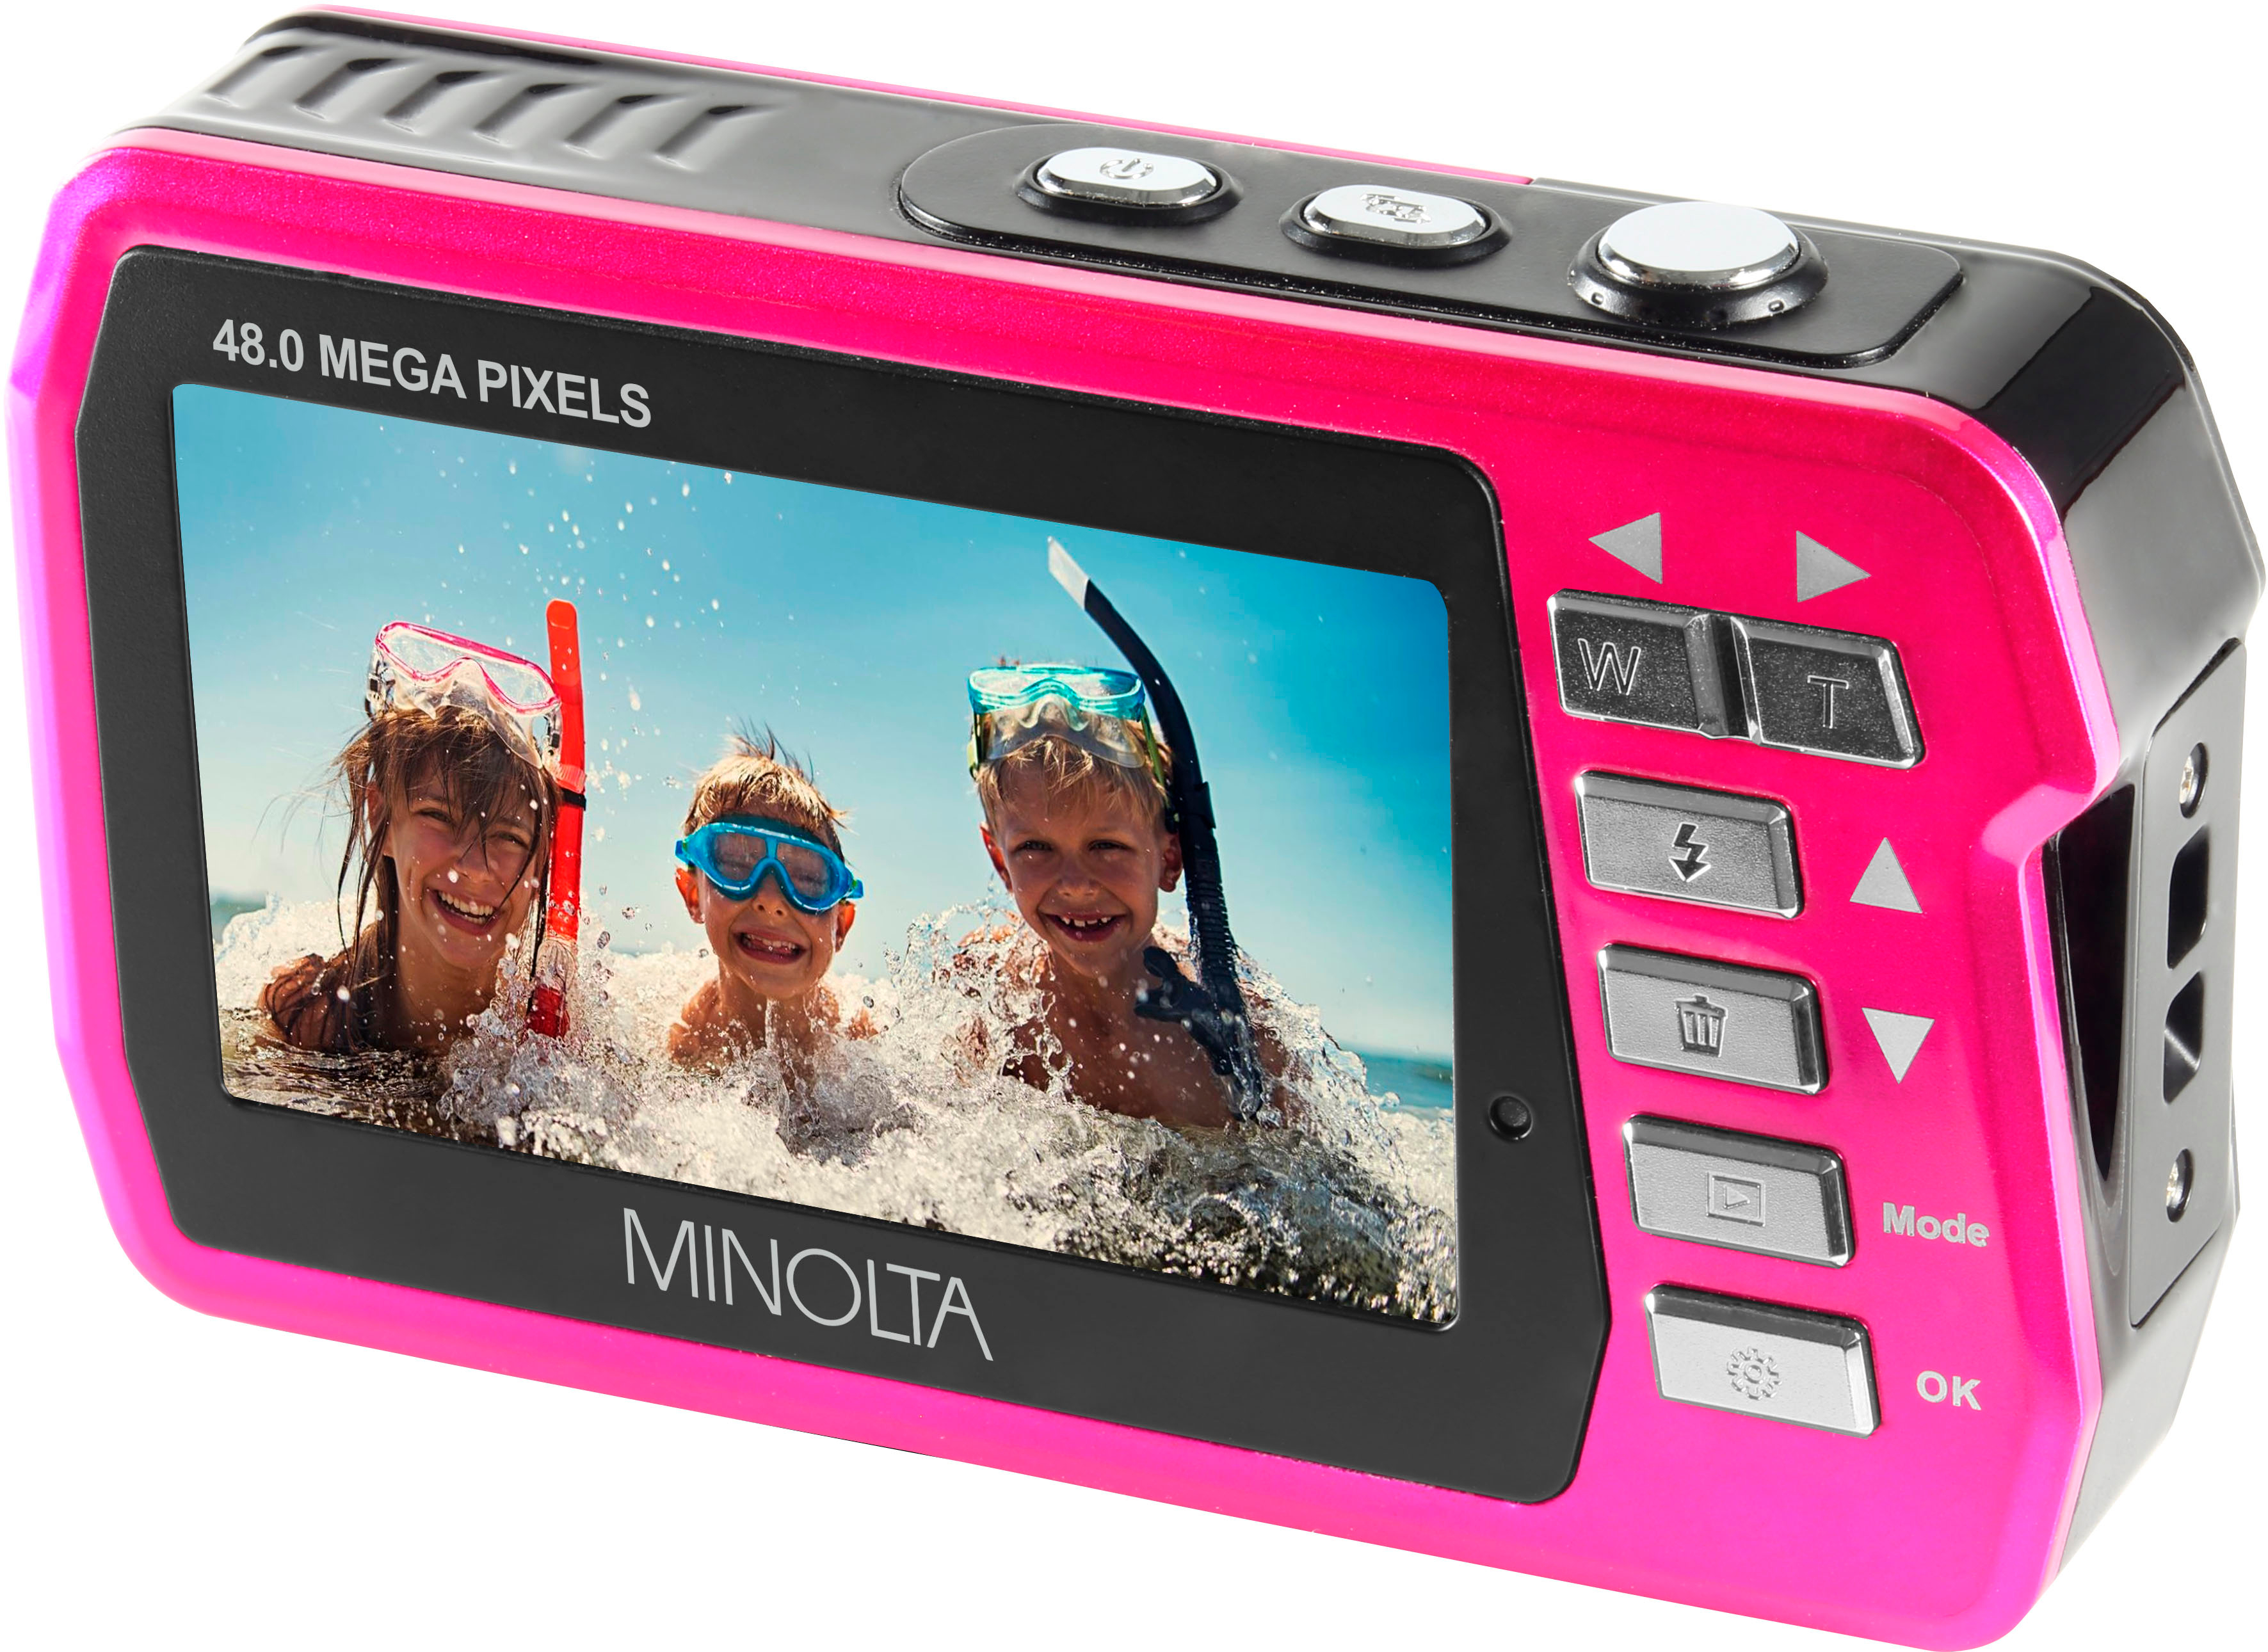 Back View: Minolta - MN40WP 48.0 Megapixel Waterproof Digital Camera - Pink